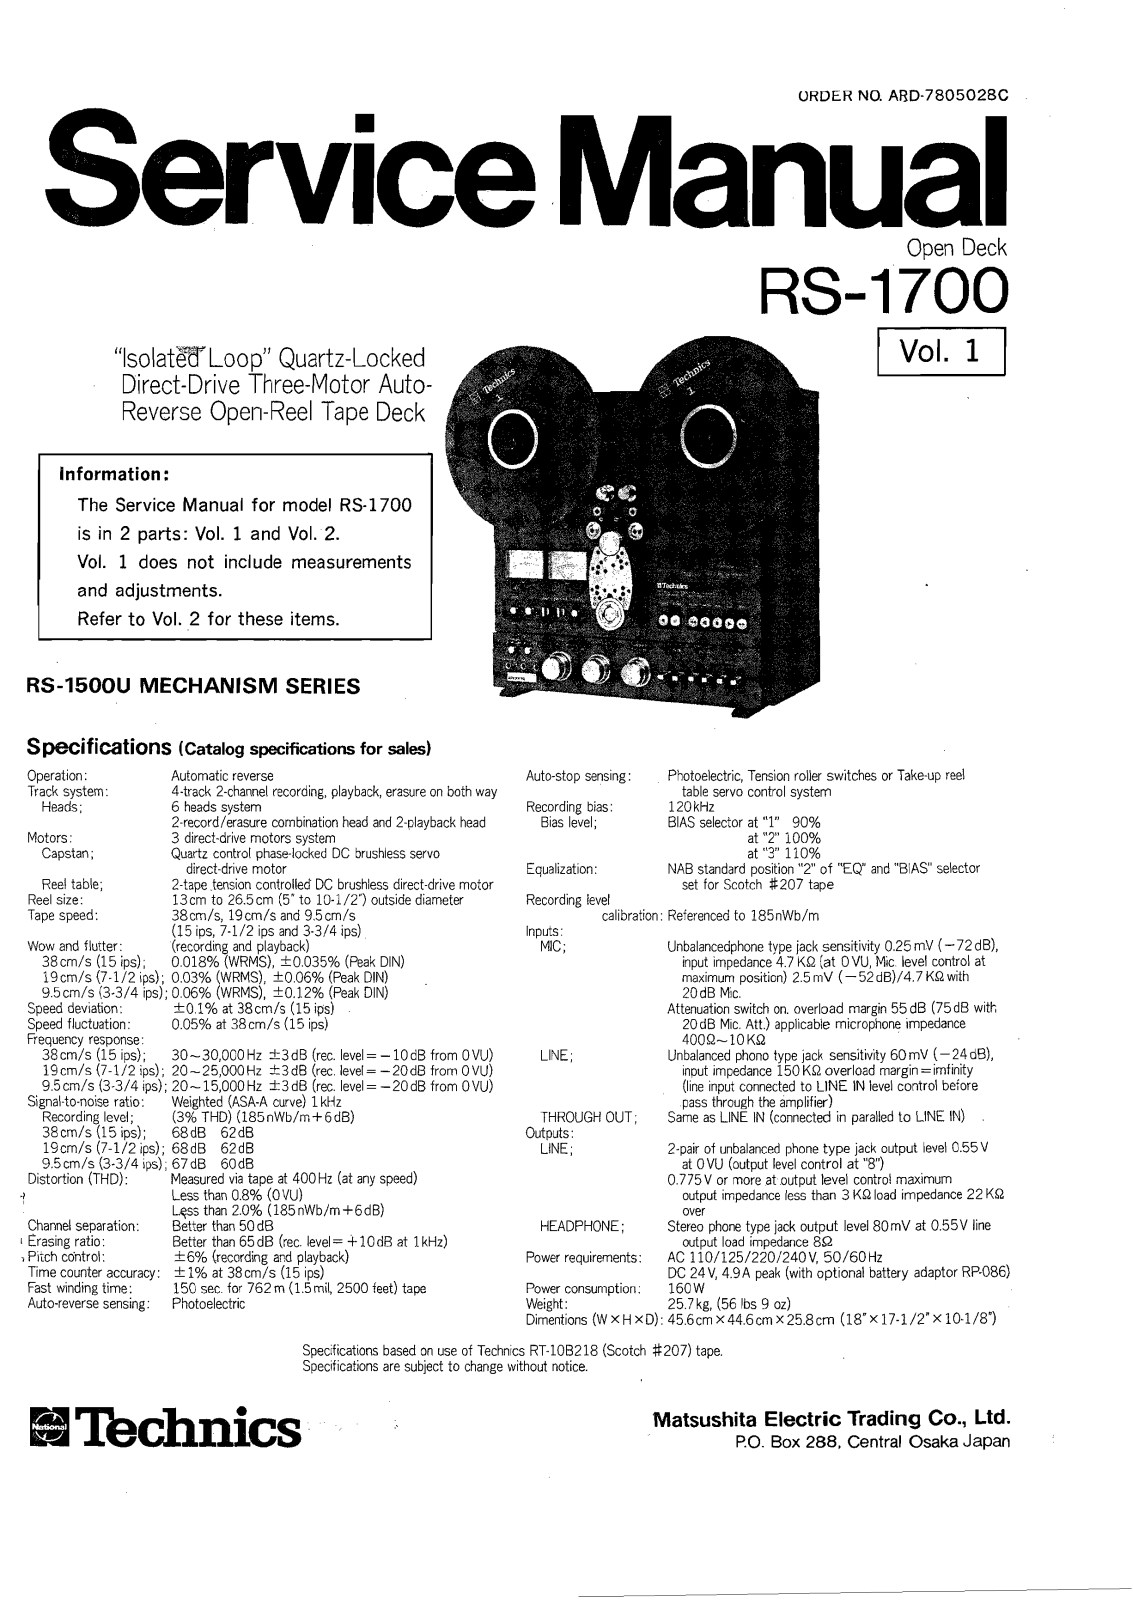 Technics RS-1700 Service Manual